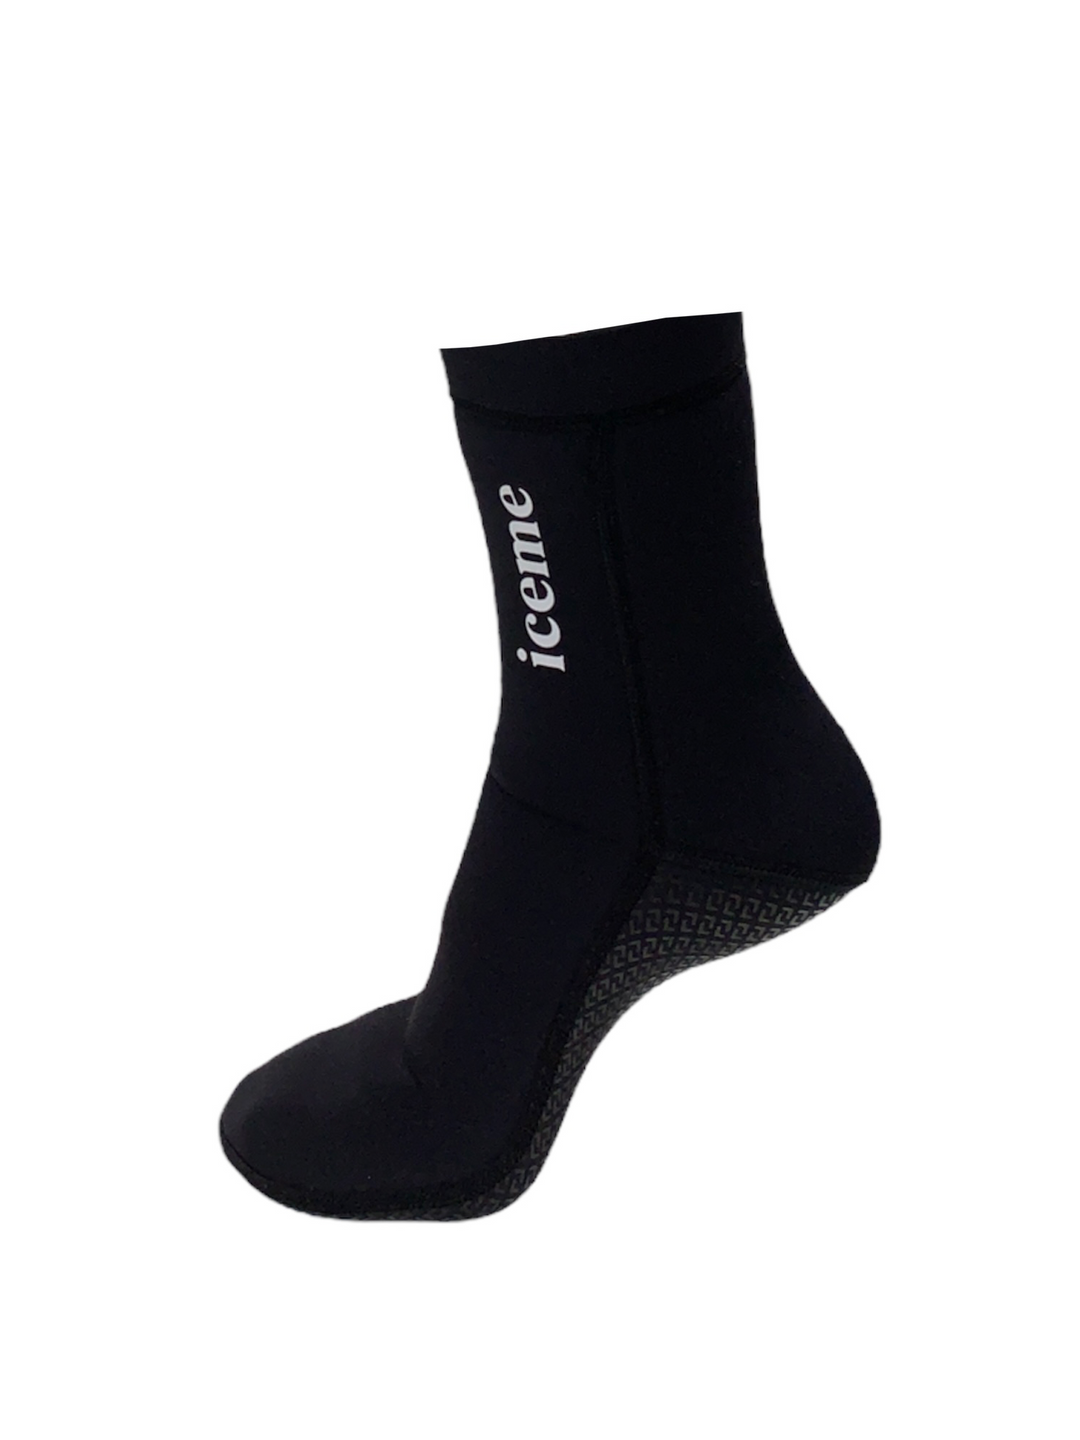 Iceme Neoprene Socks - Black